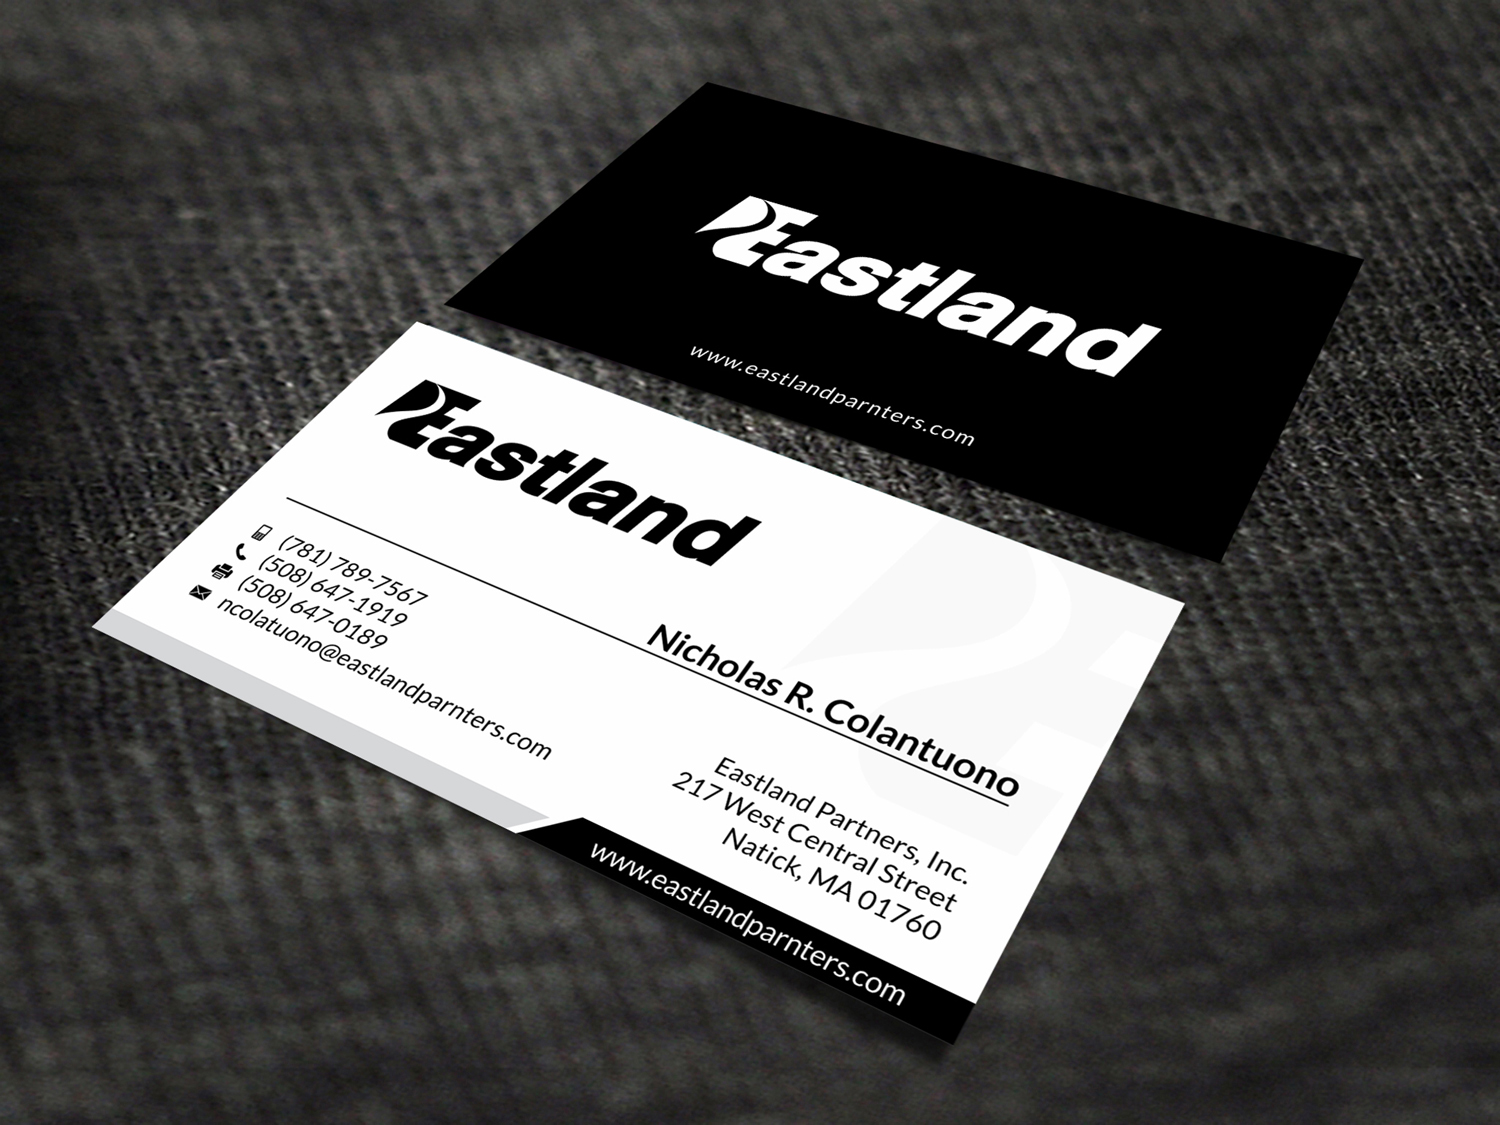 Business Card & Stationery Design entry 1336420 submitted by skyford412 to the Business Card & Stationery Design for Eastland Partners Inc.  run by eschollard